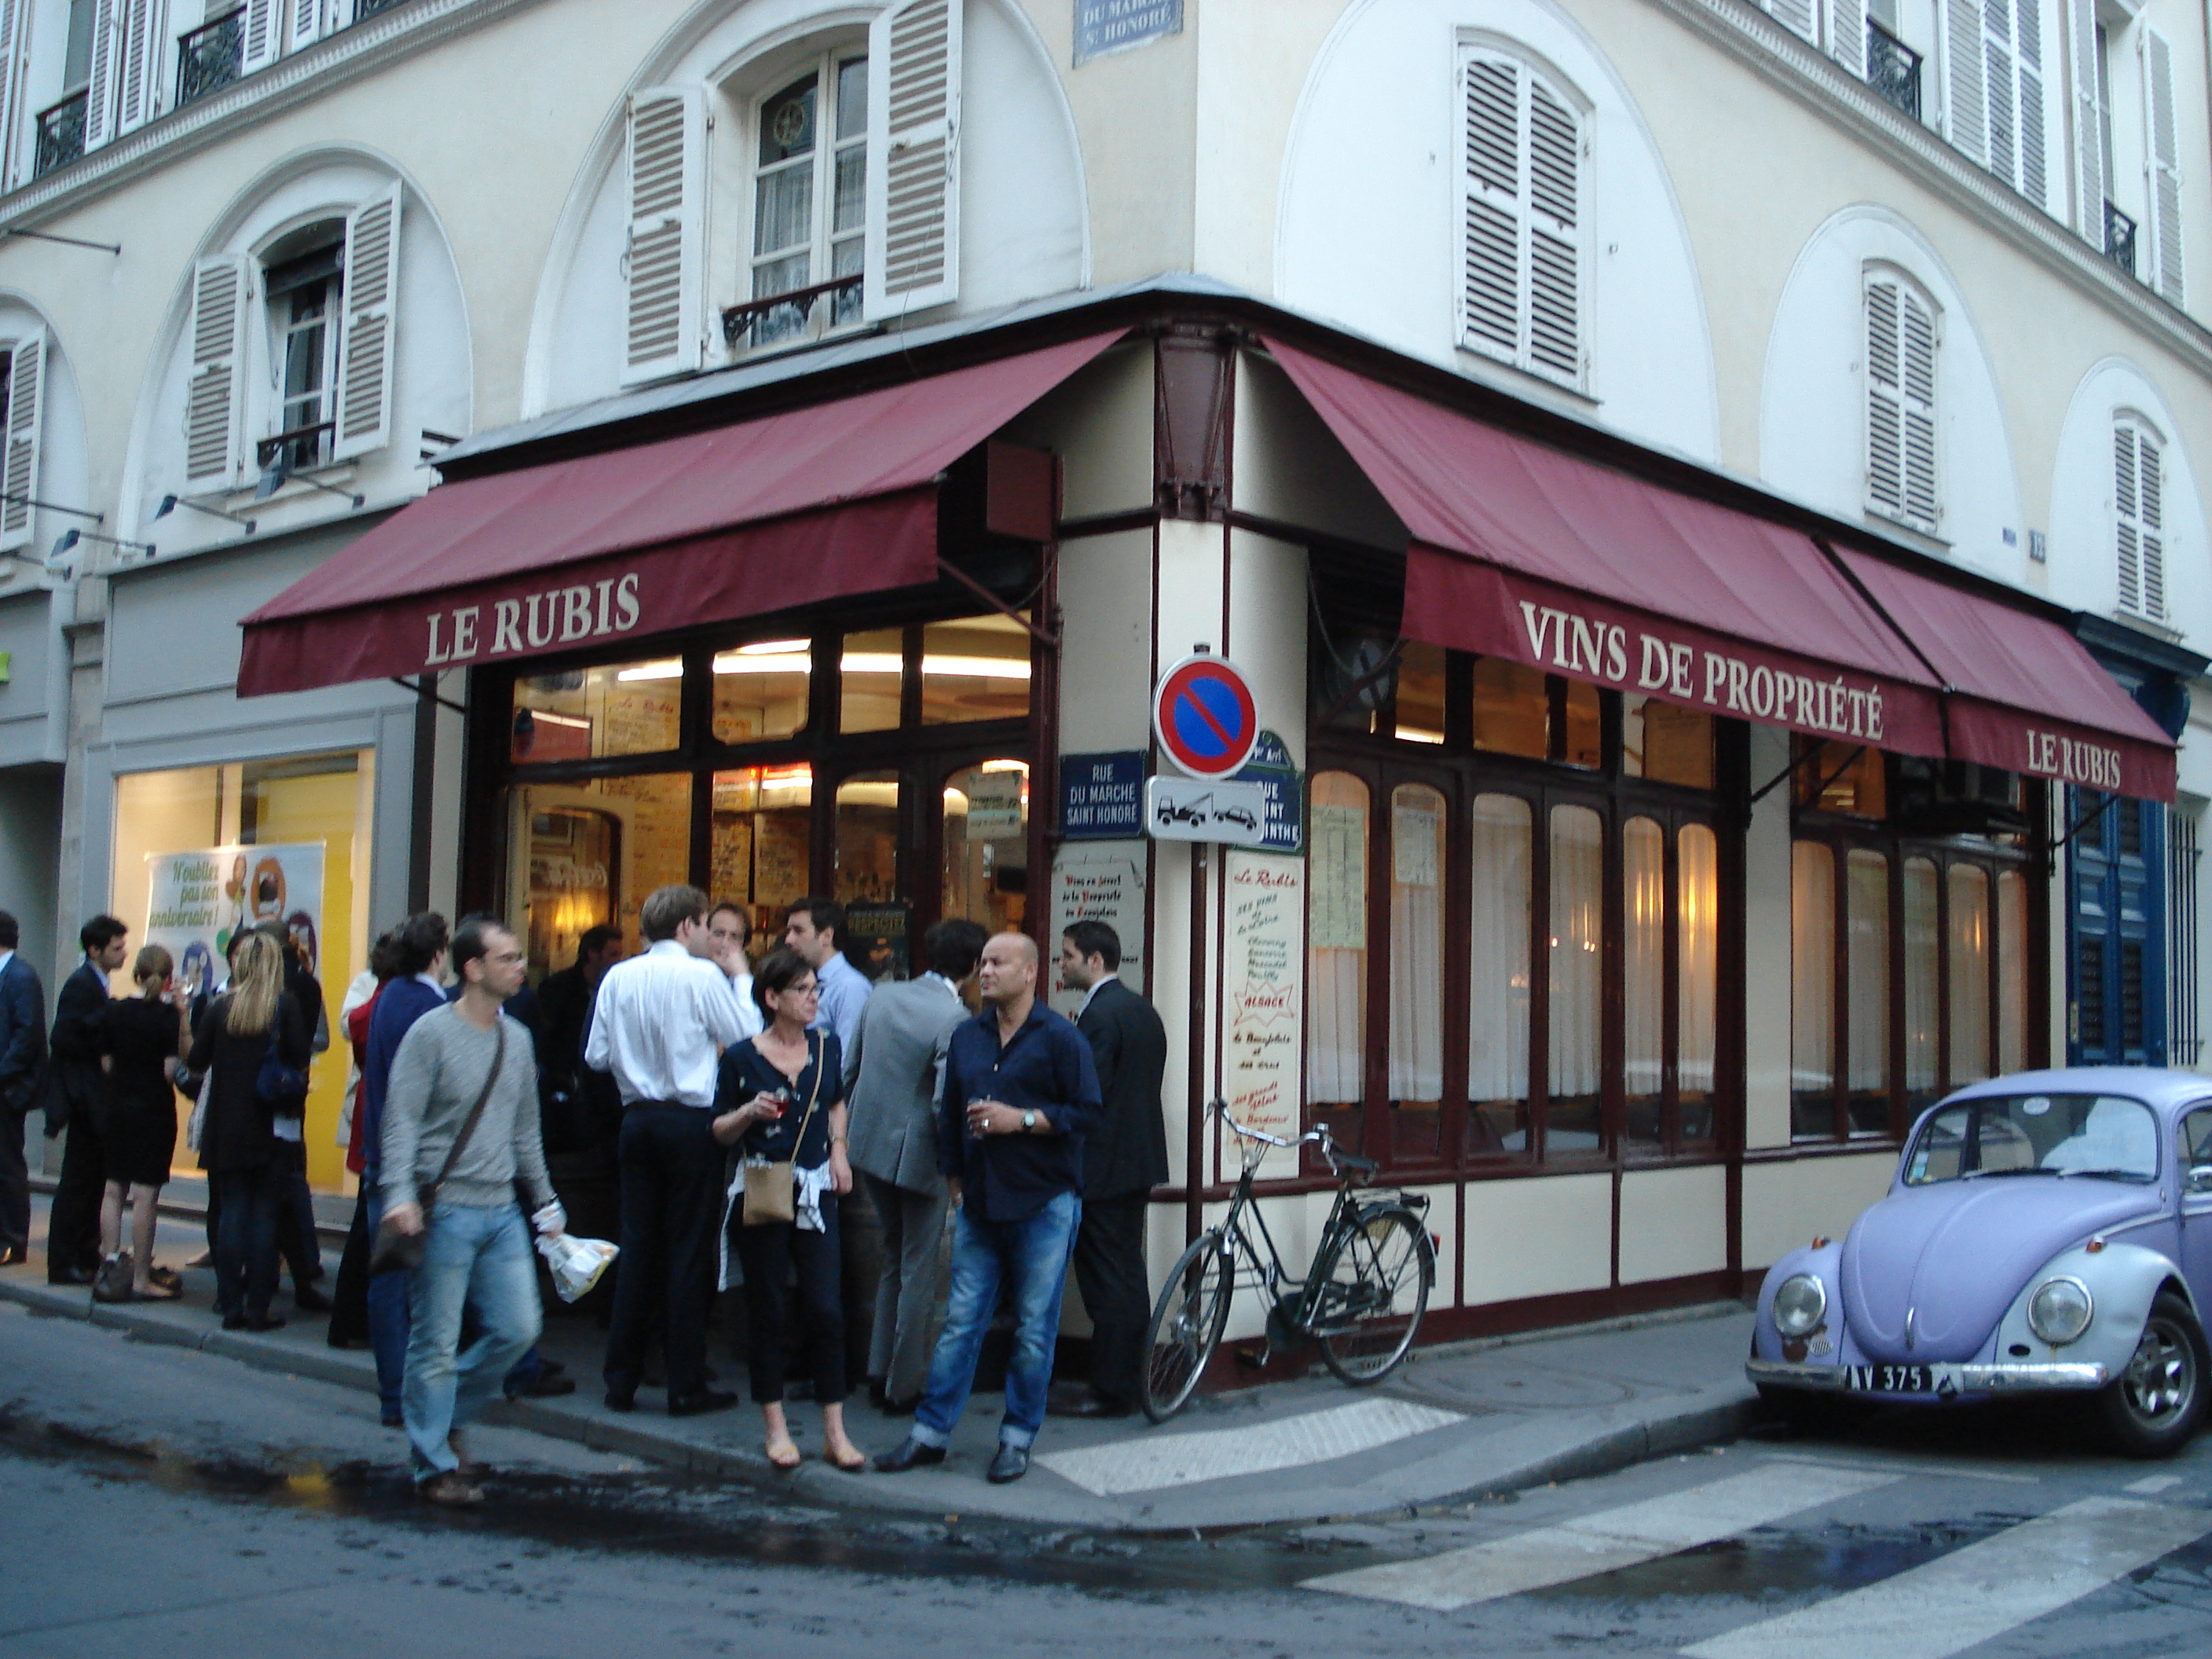 Le Rubis Wine Bar in Paris, France